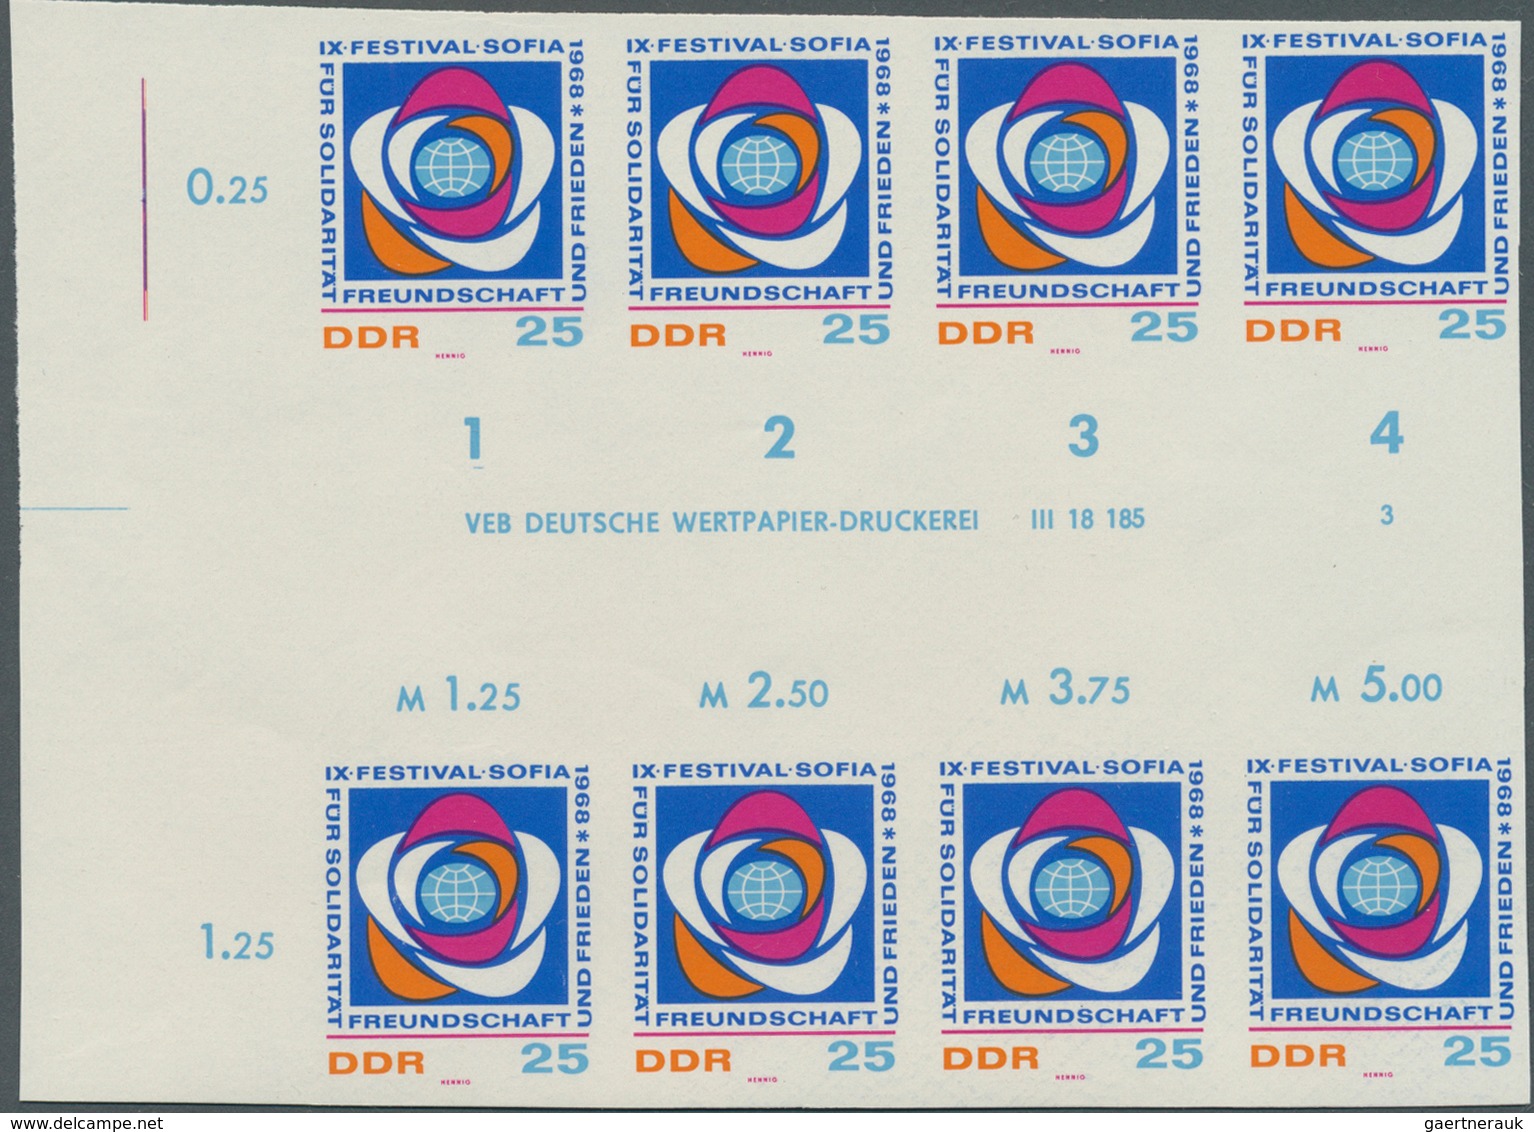 DDR: 1968, Weltfestspiele der Jugend und Studenten in Sofia 25 Pf. 'Emblem der Weltfestspiele' in 6